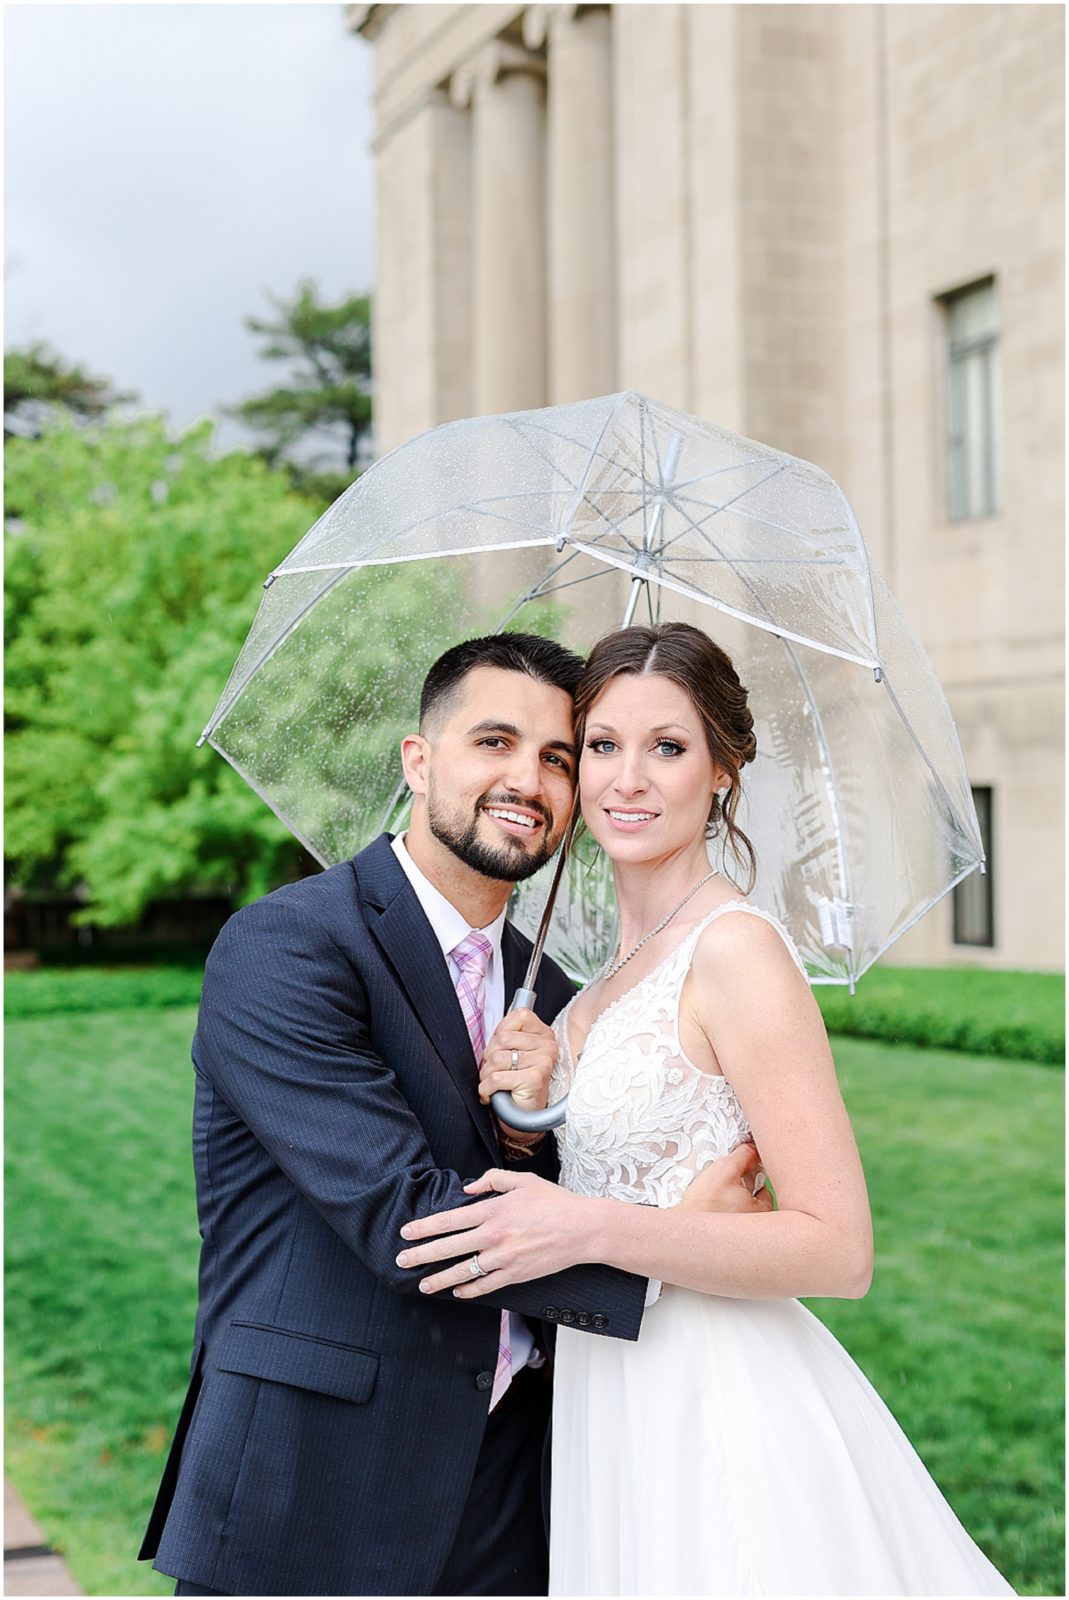 umbrella wedding rain photo